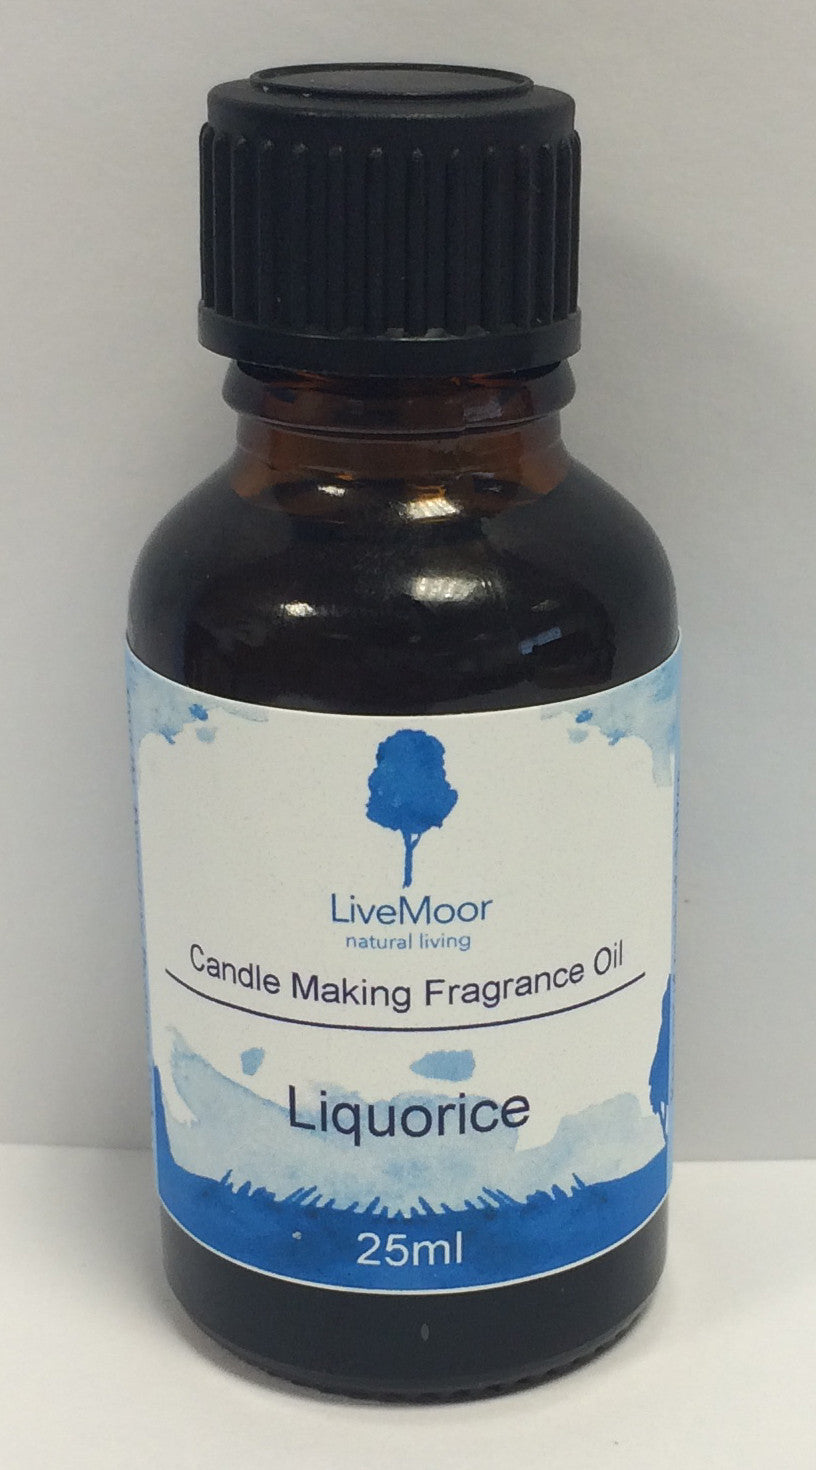 LiveMoor Fragrance Oil - Liquorice - 25ml